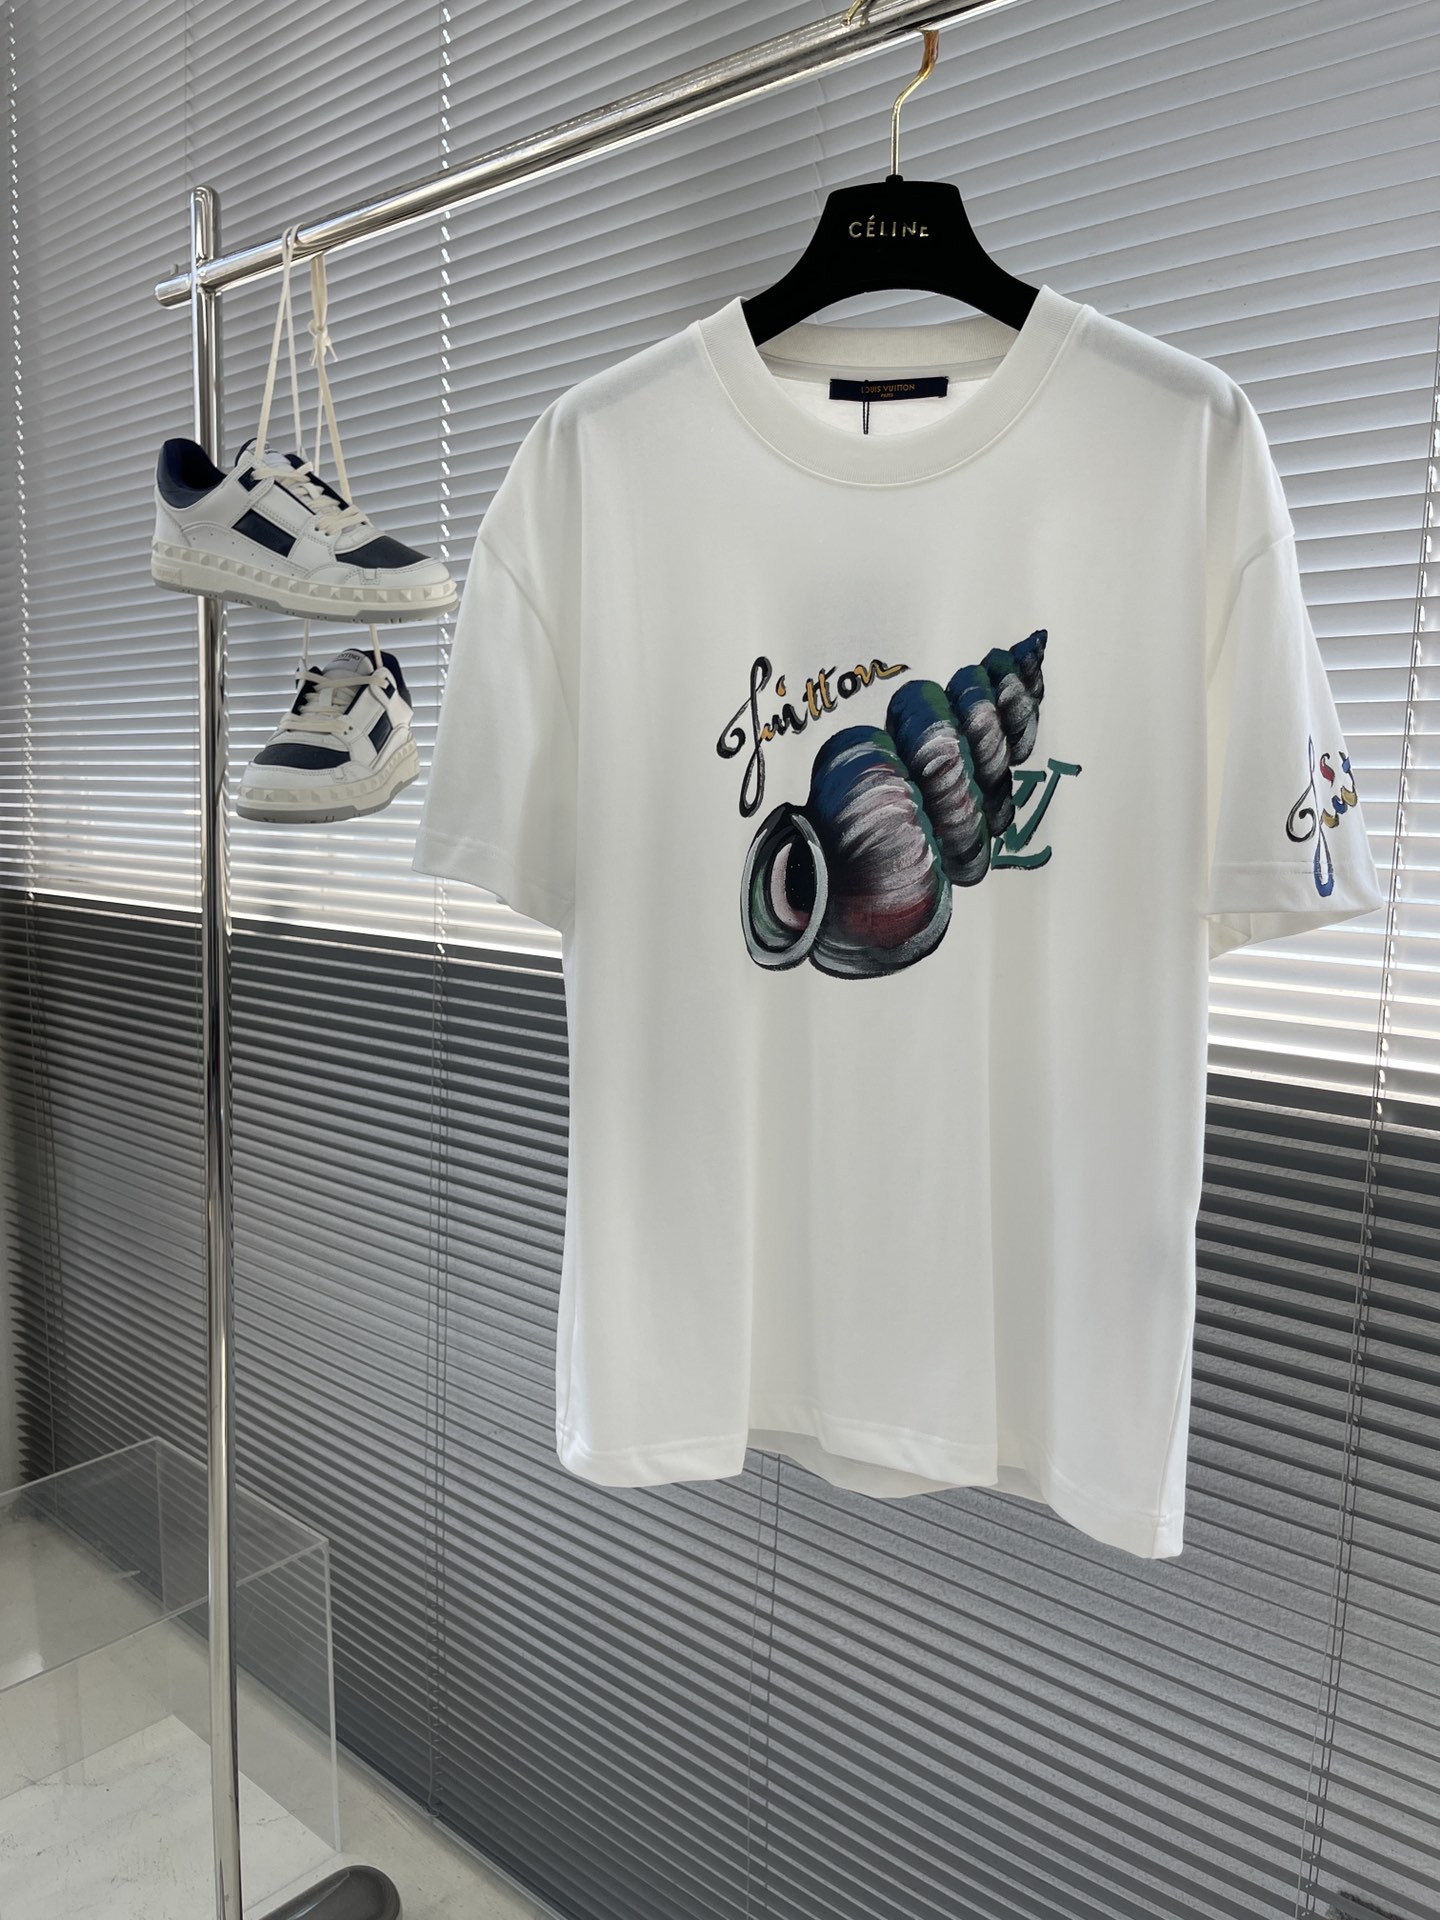 Louis Vuitton Clothing T-Shirt Unisex Cotton Summer Collection Fashion Short Sleeve